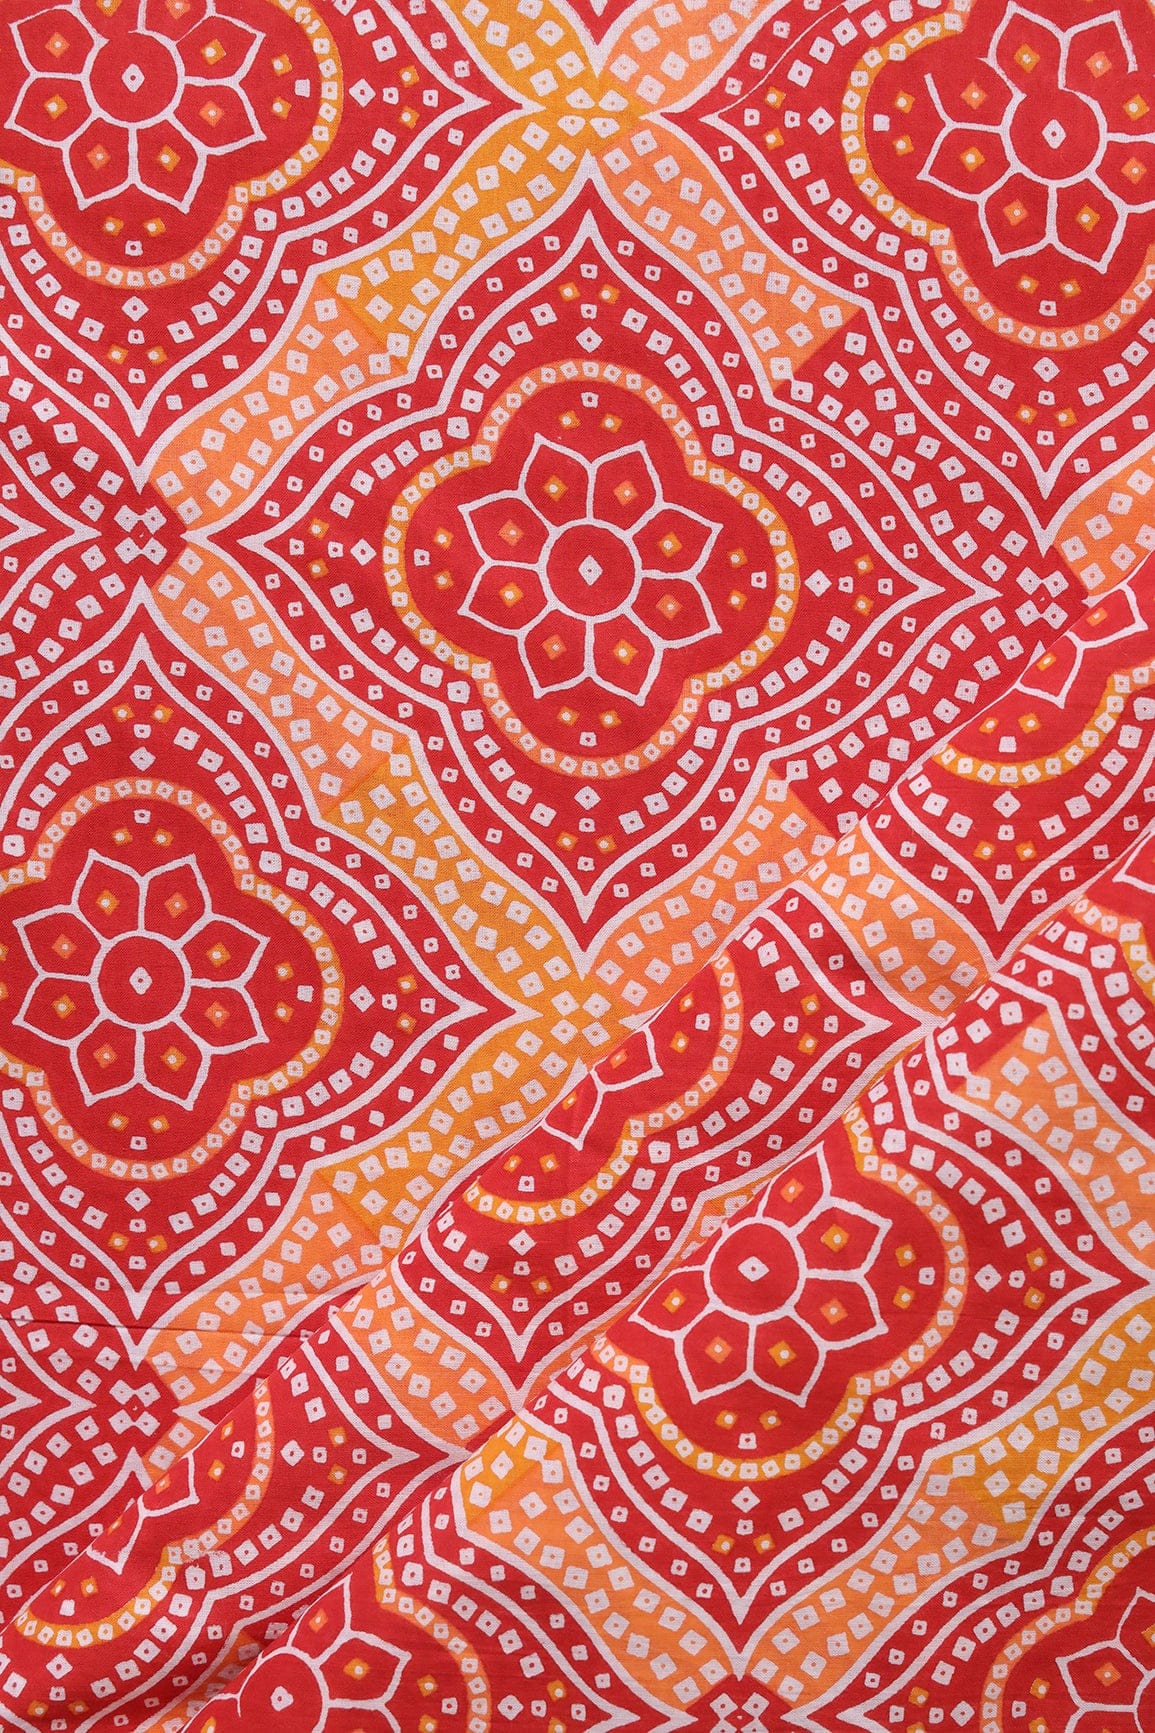 doeraa Prints Red And Orange Bandhani Pattern Screen Print organic Cotton Fabric